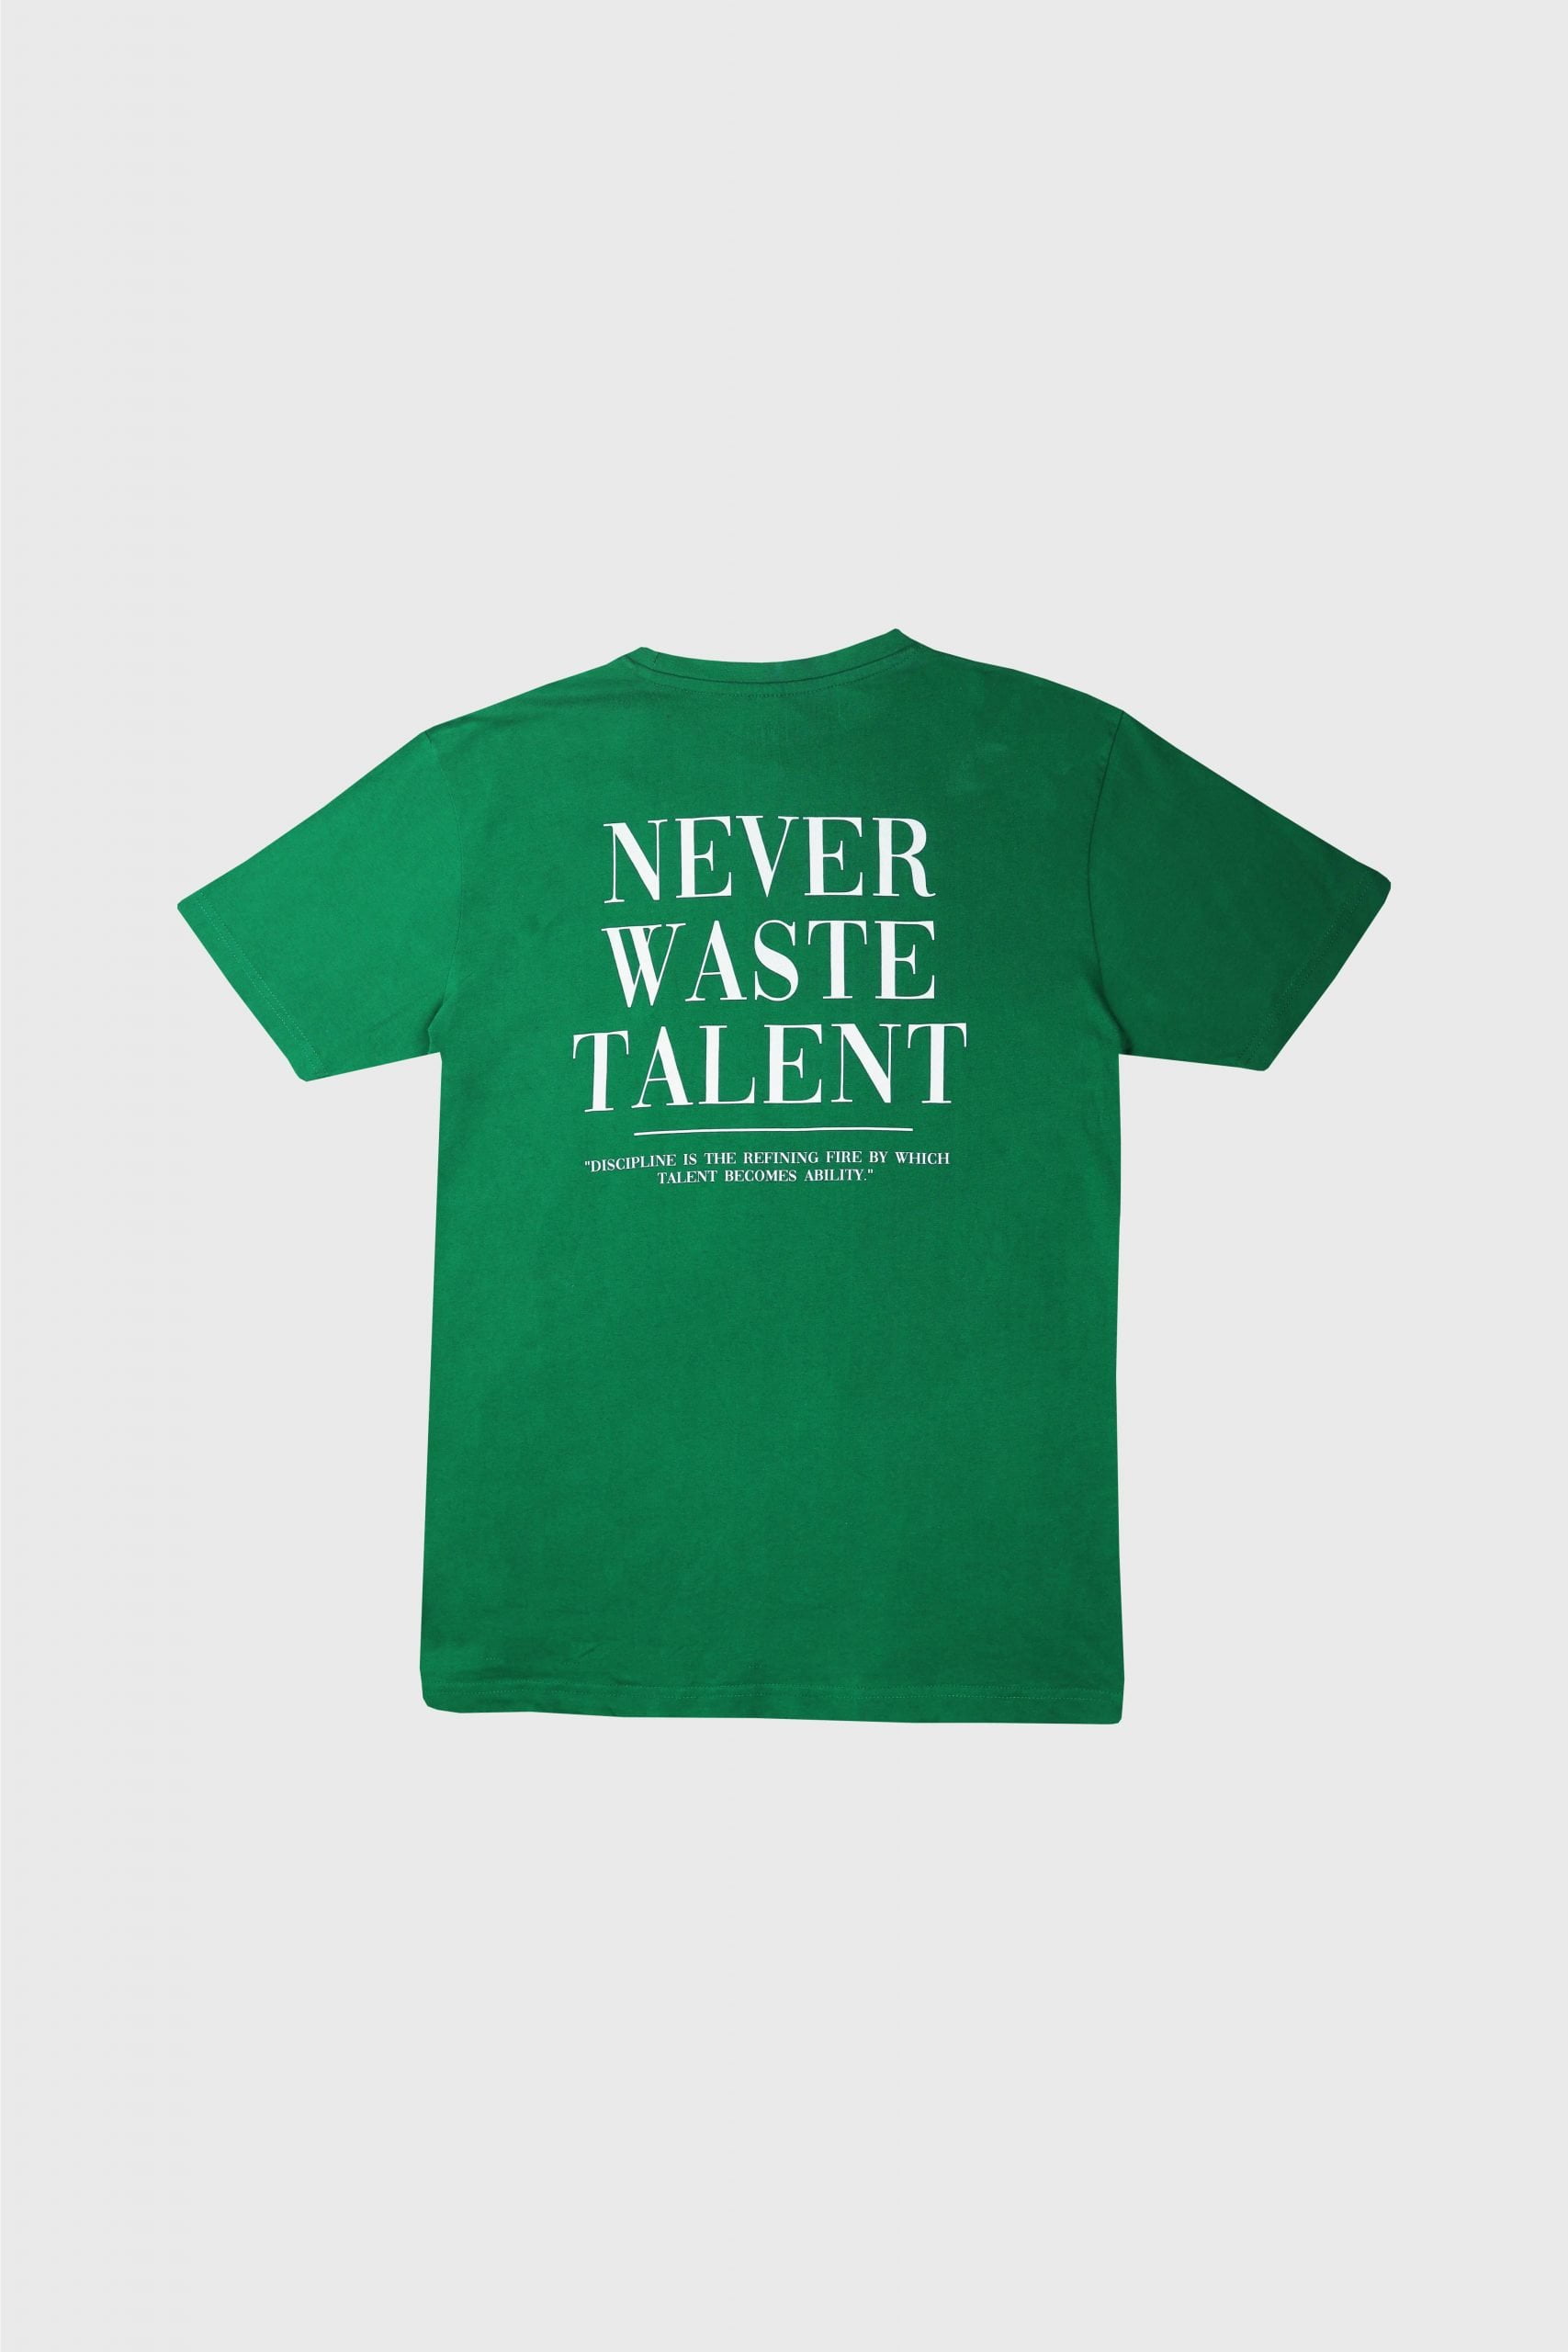 Never waste talent tshirt